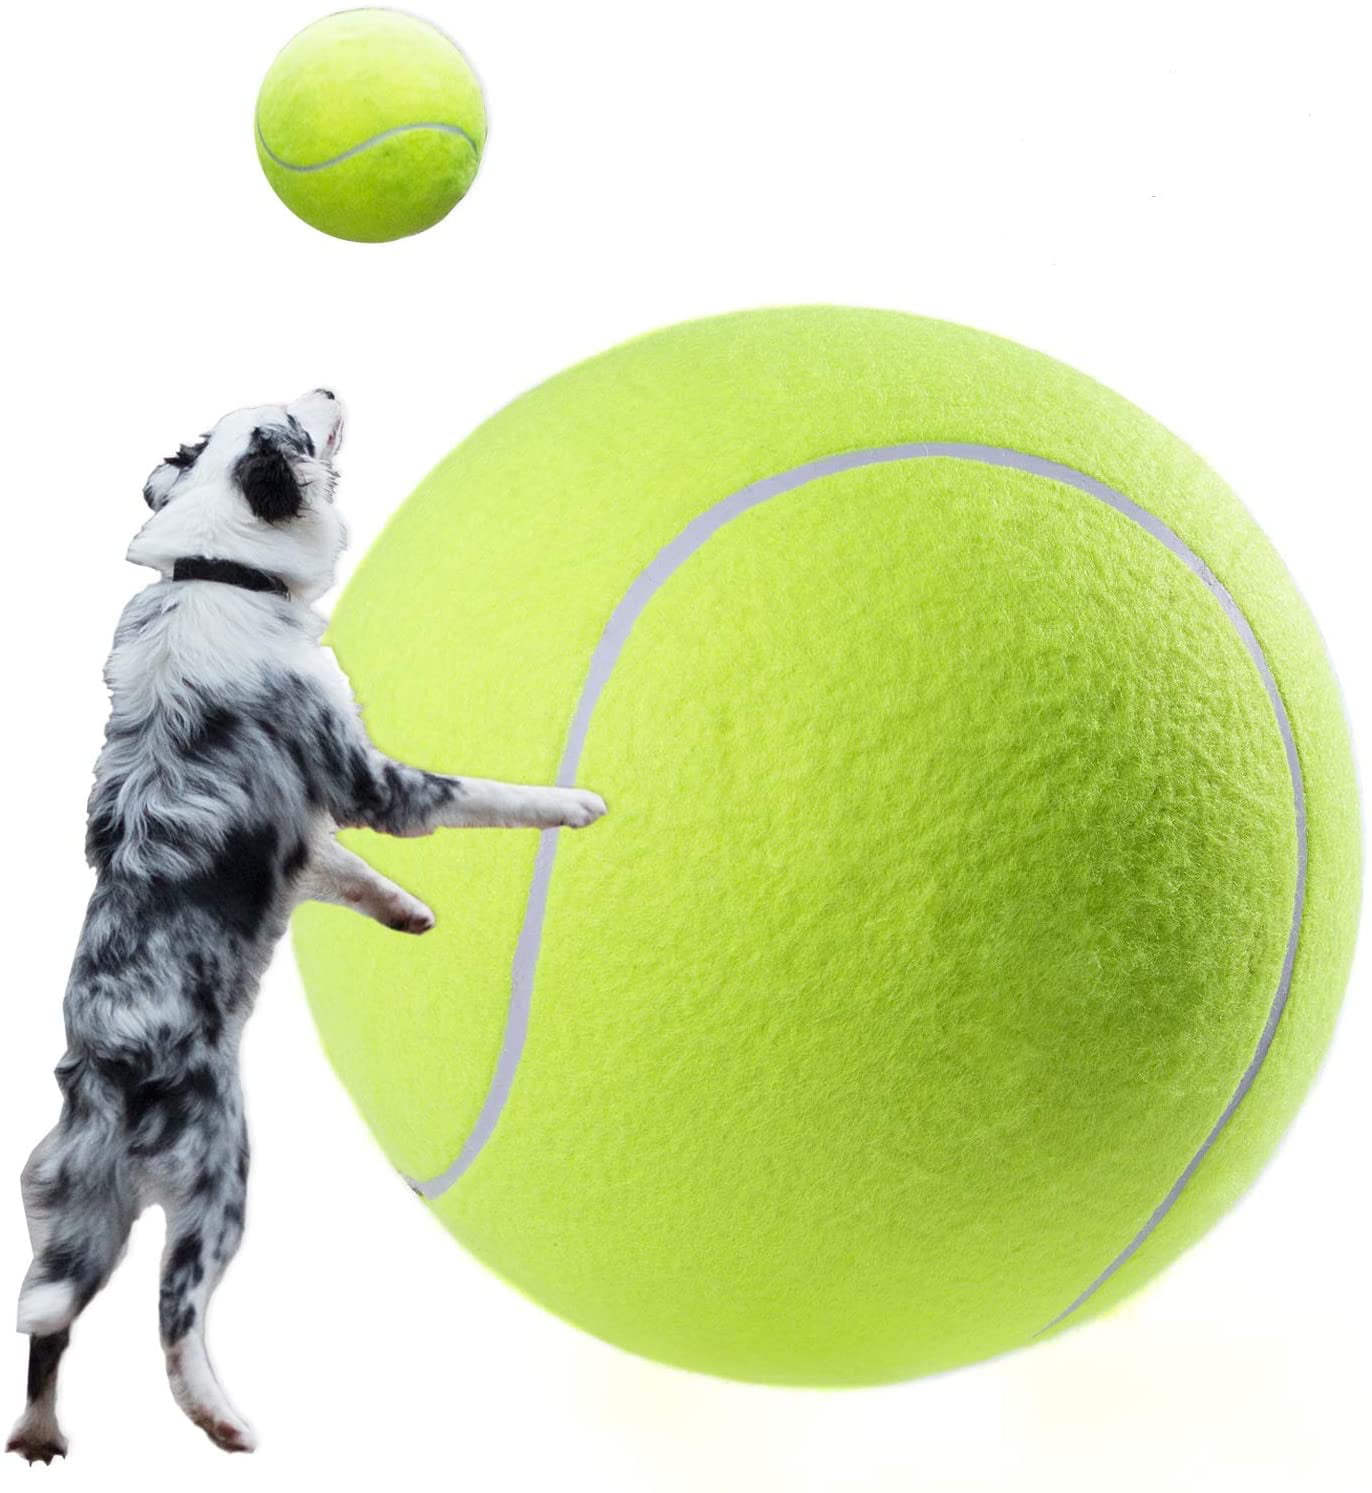 Tennis Balls Training Game Sports Outdoor Fun Cricket Beach Dog Pet Play Leisure 